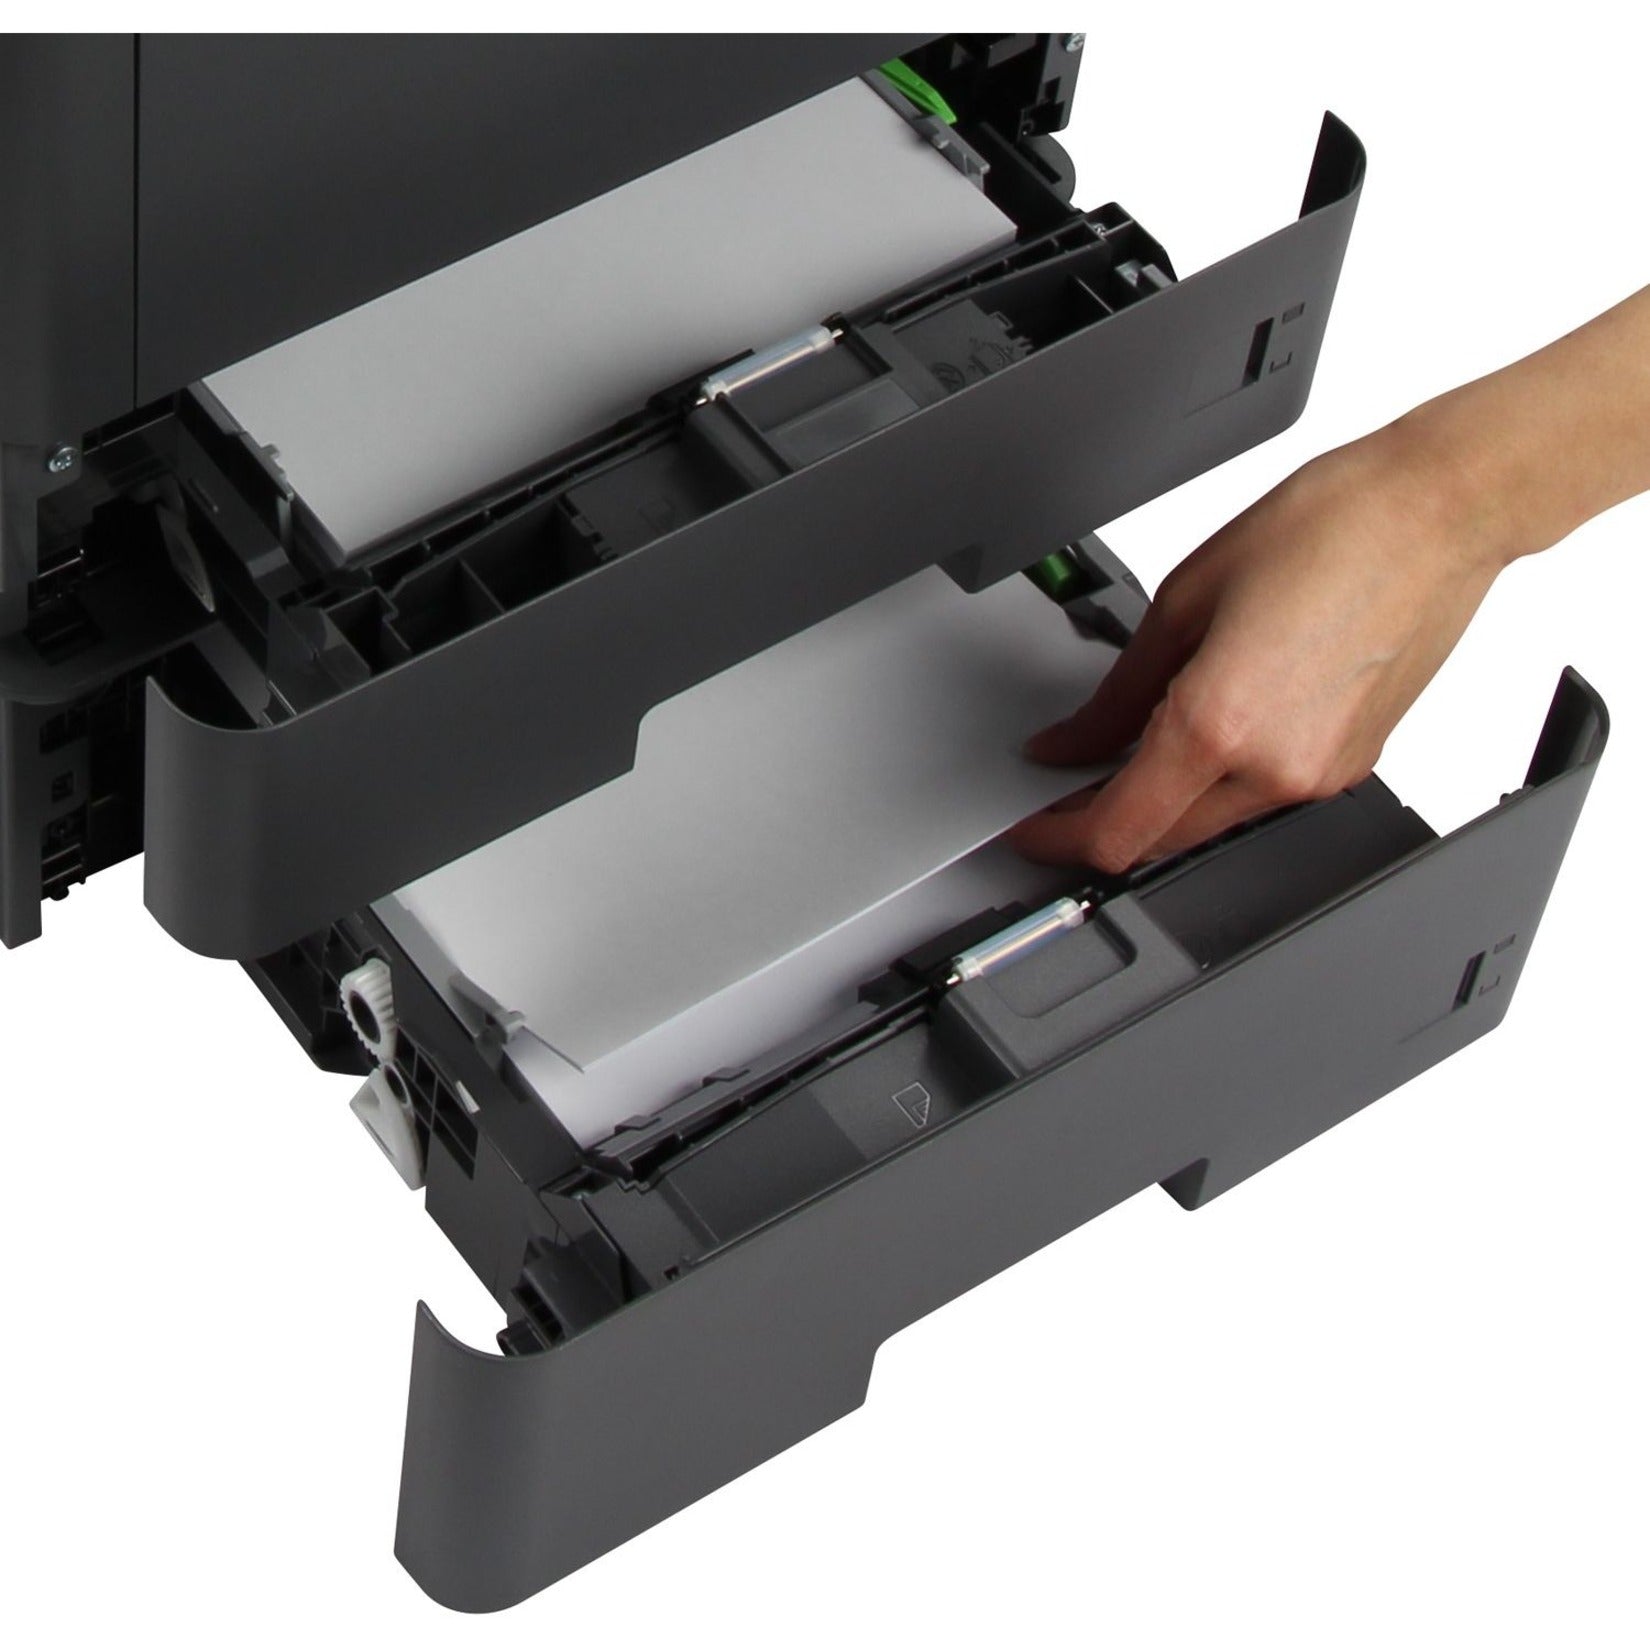 Brother HLL5200DWT HL-L5200DWT Monochrome Laser Printer, 42ppm, 250-Sheet Capacity, Black/Gray